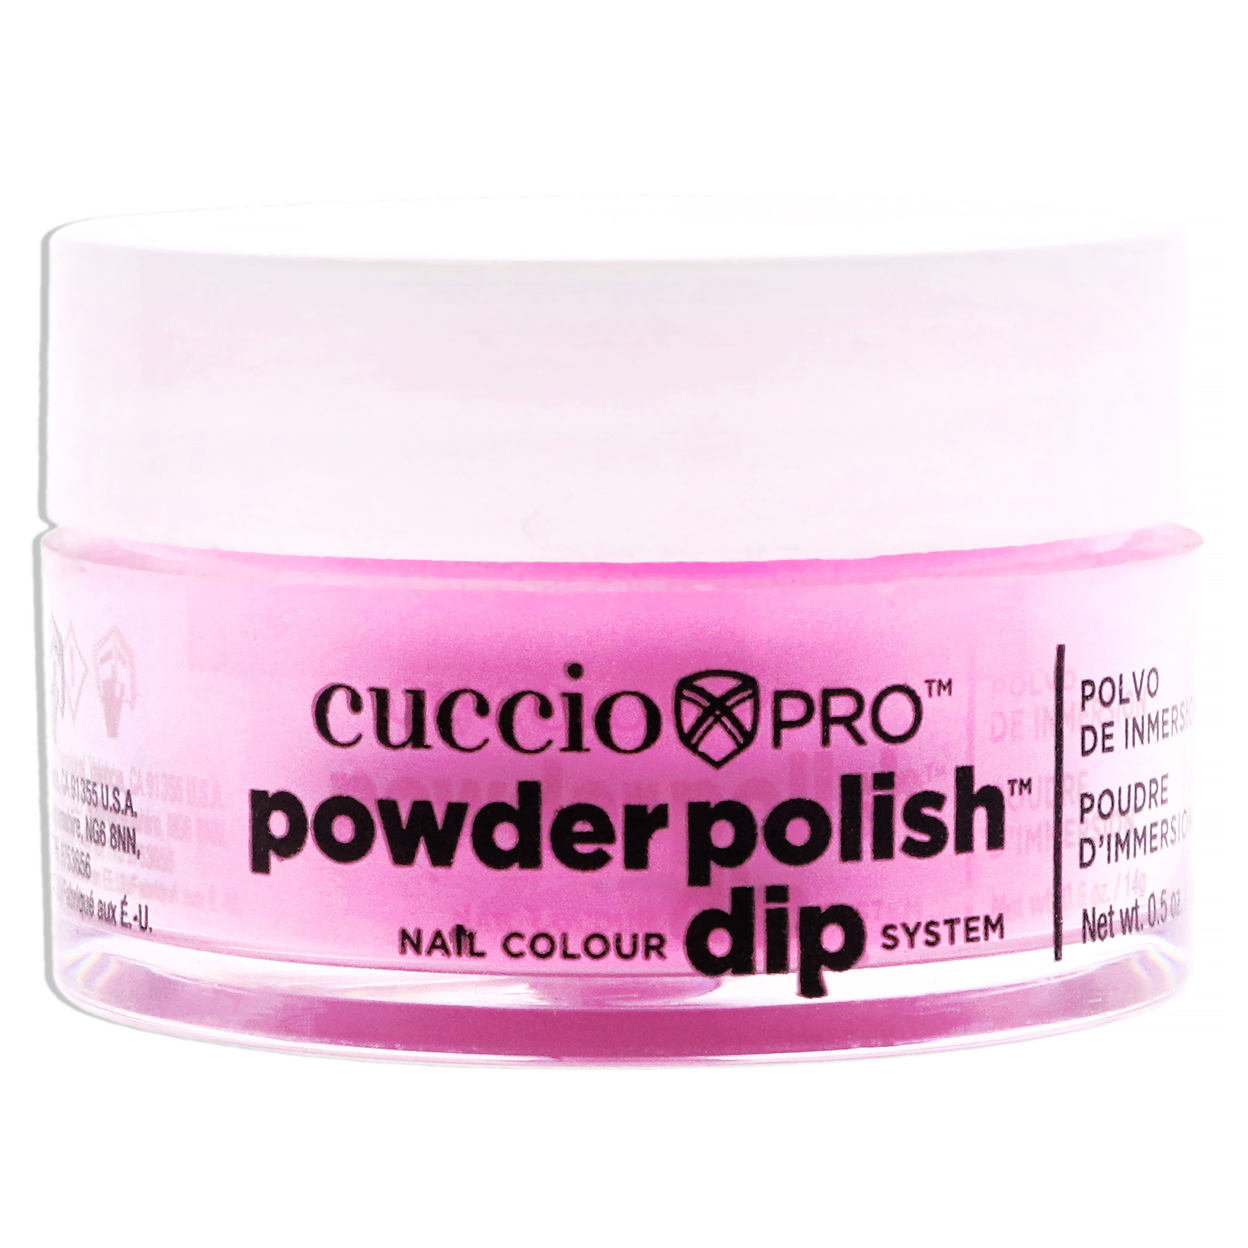 Cuccio Colour Pro Powder Polish Nail Colour Dip System - Neon Pink Nail Powder 0.5 Oz